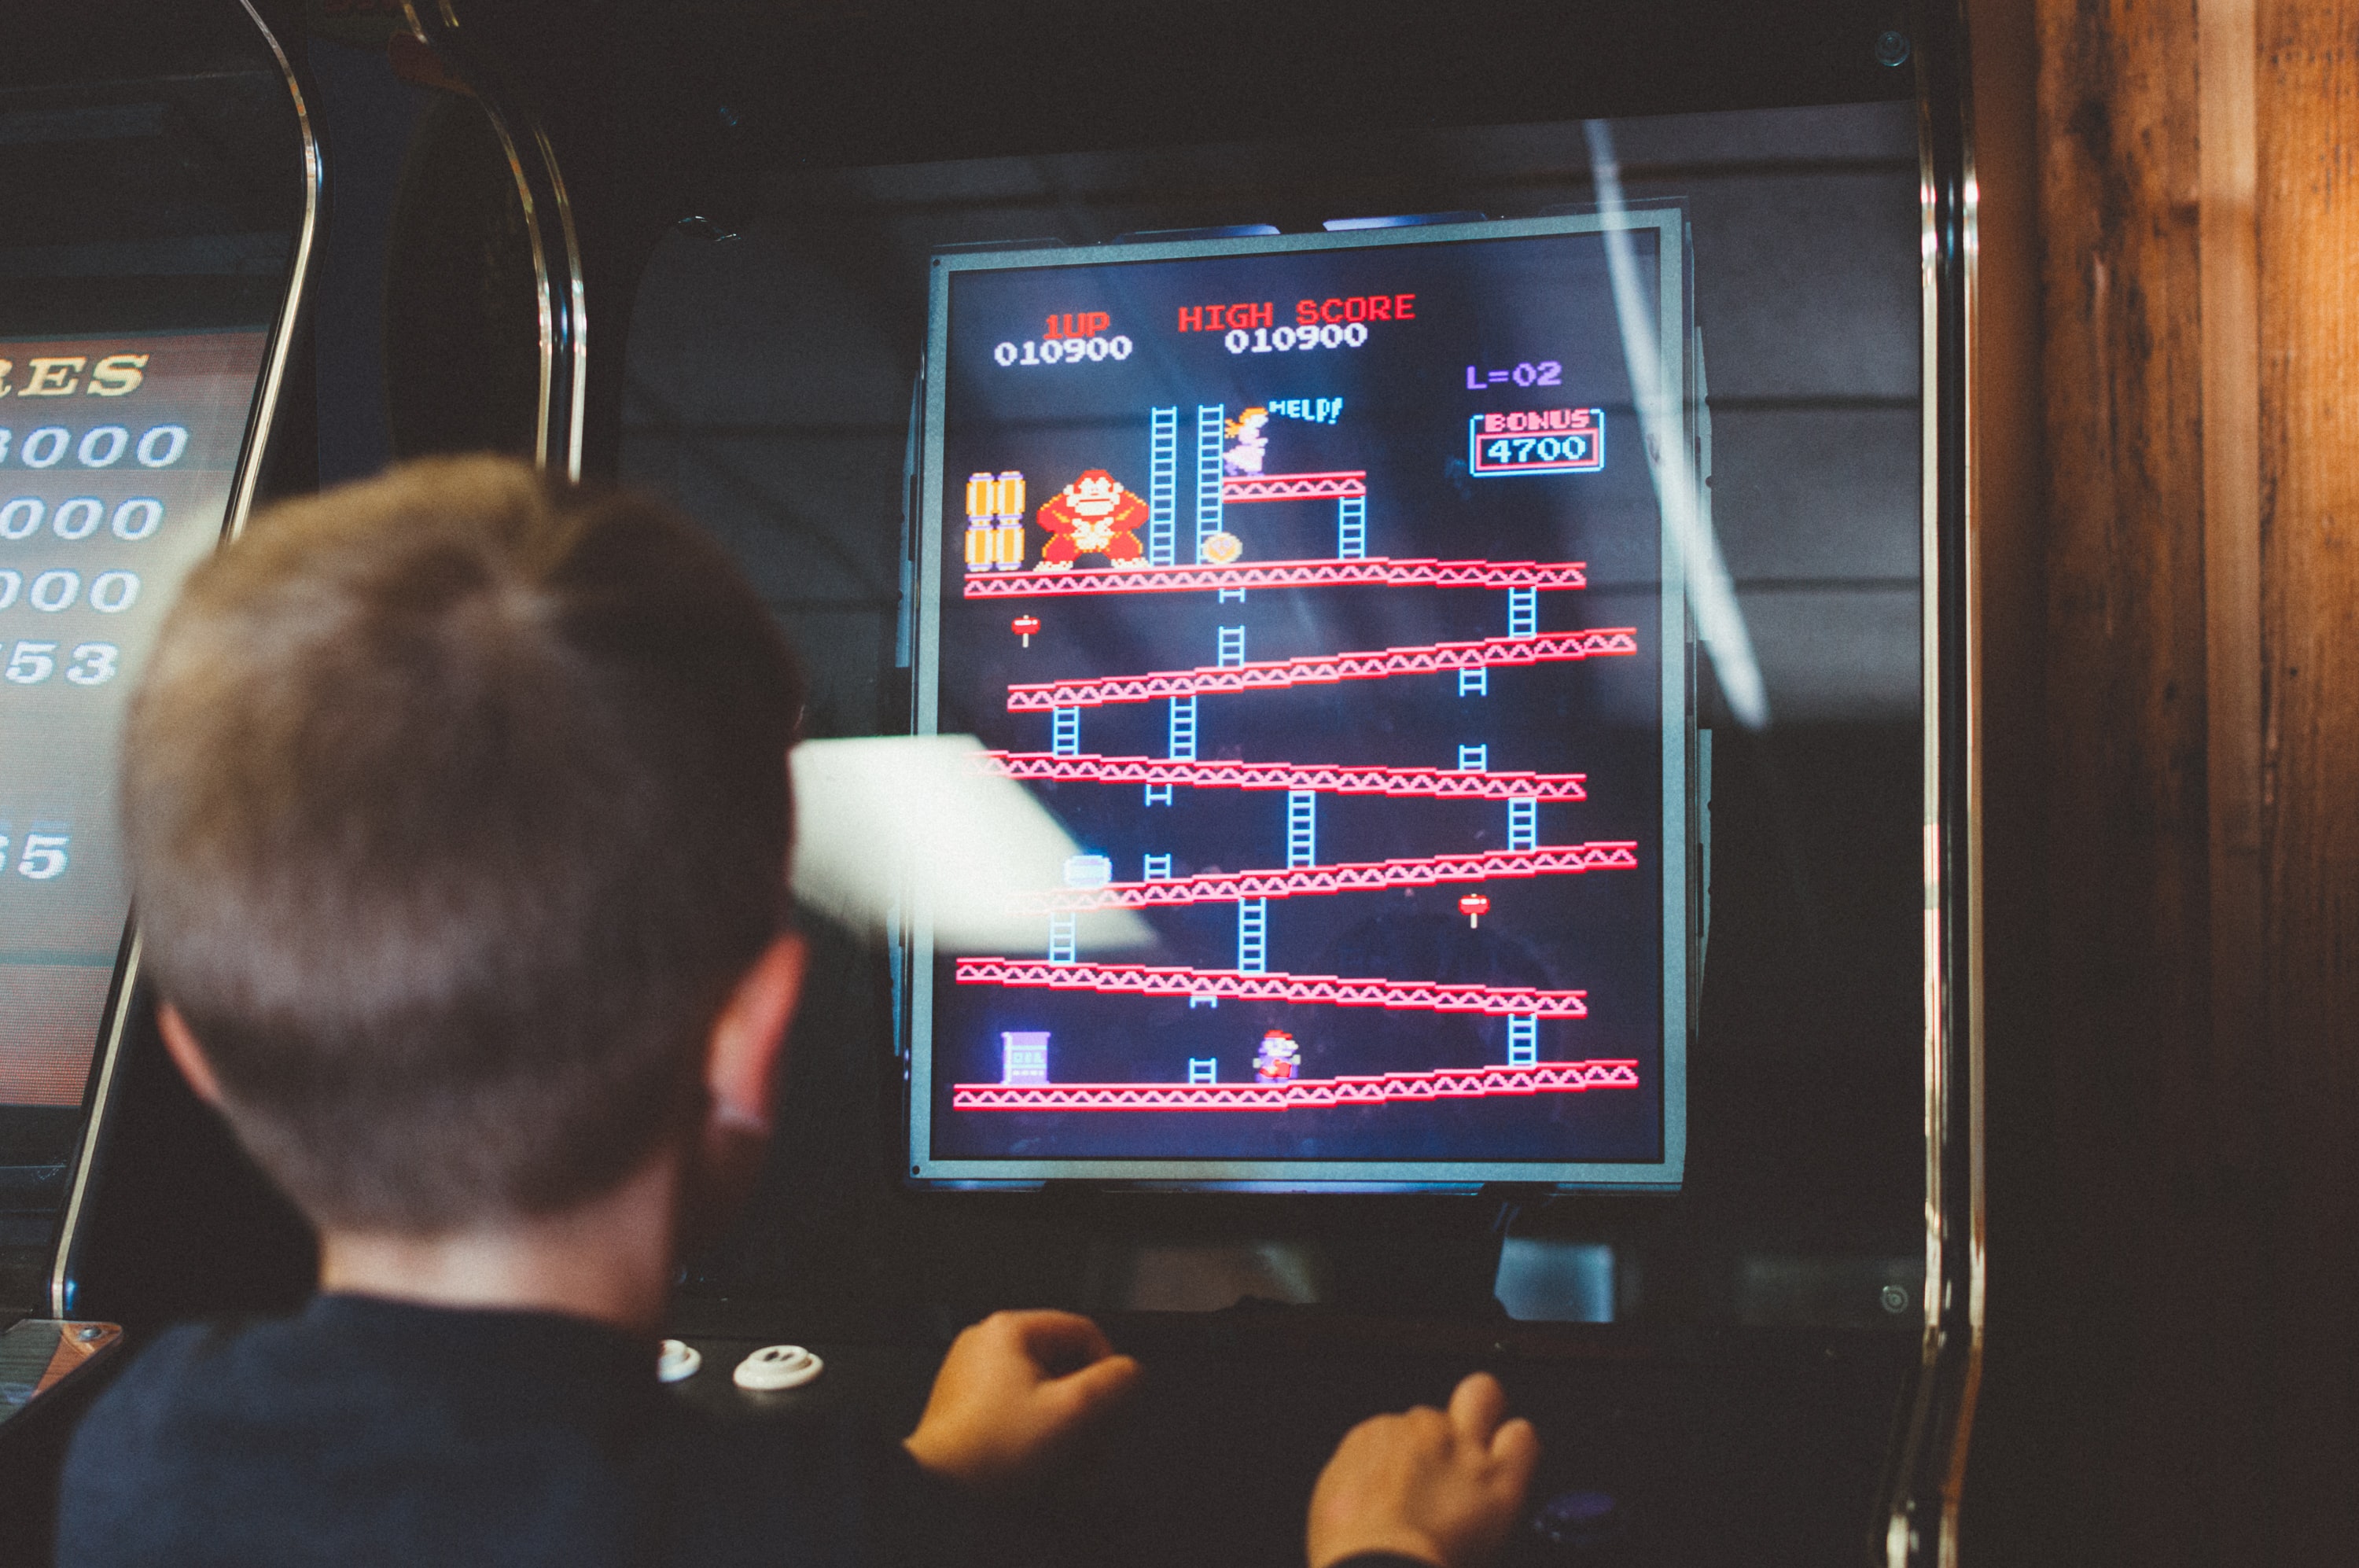 Donkey Kong arcade